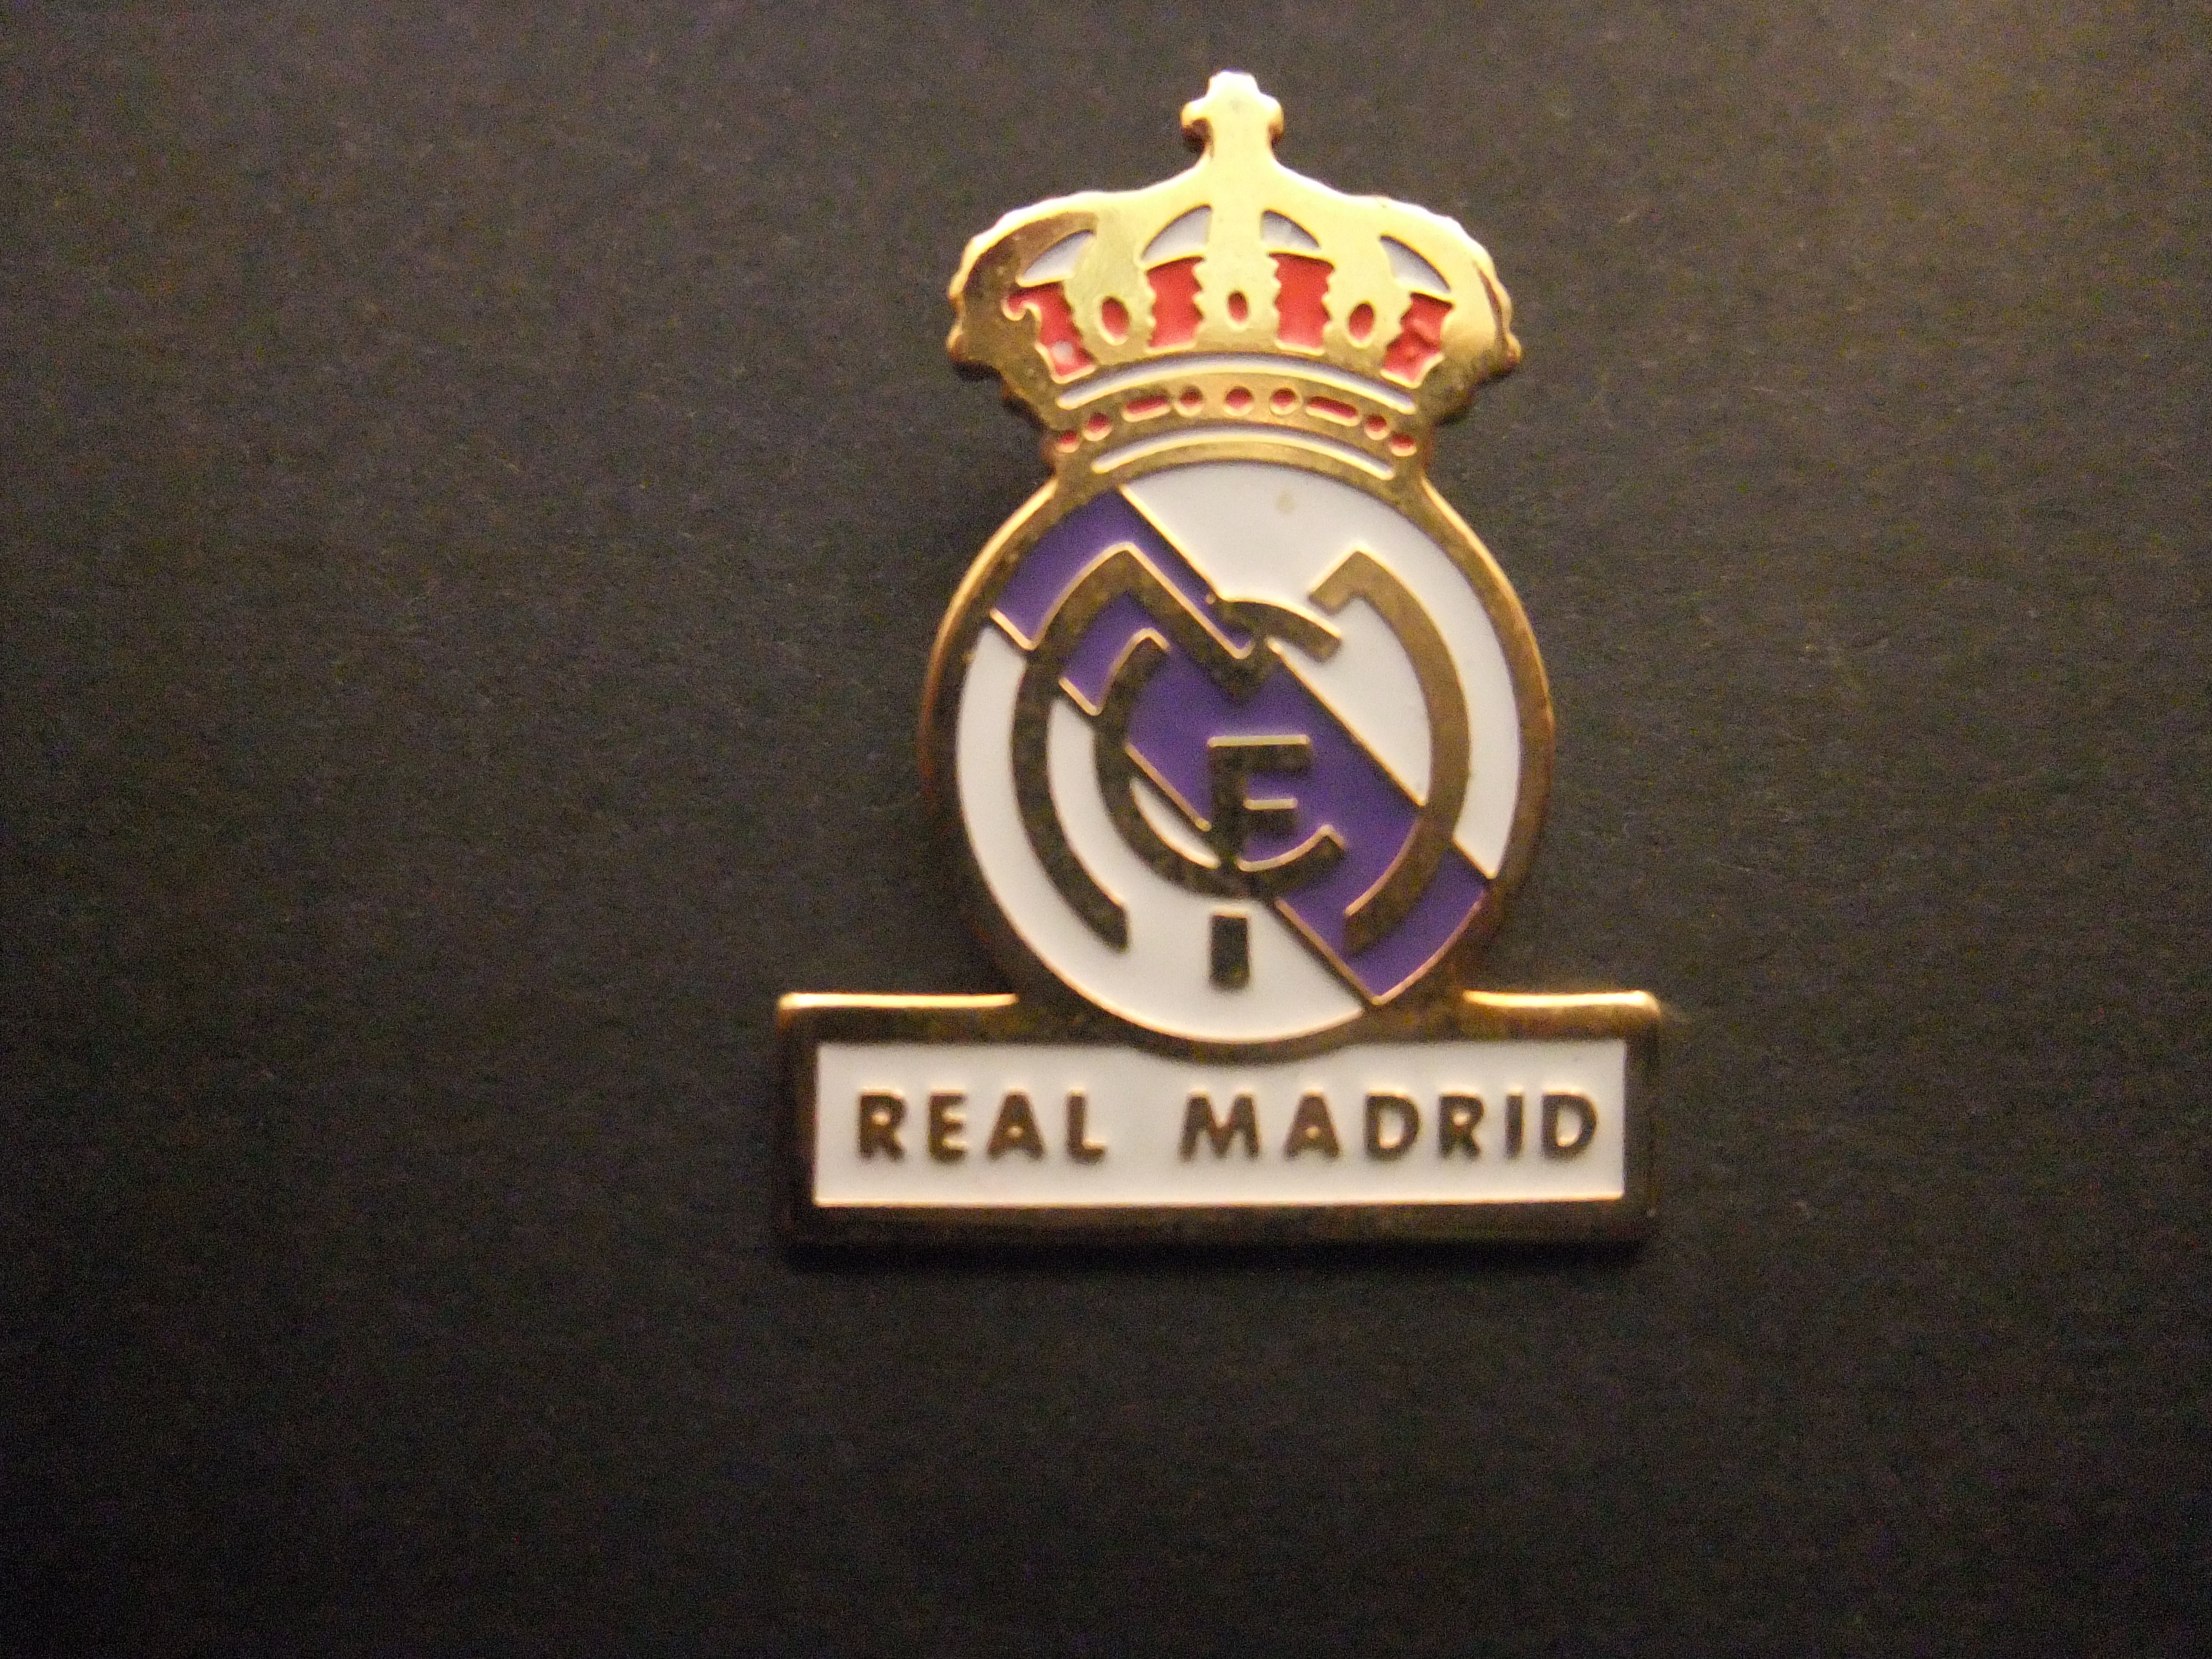 Real Madrid (Koninklijk) Spaanse voetbalclub, logo